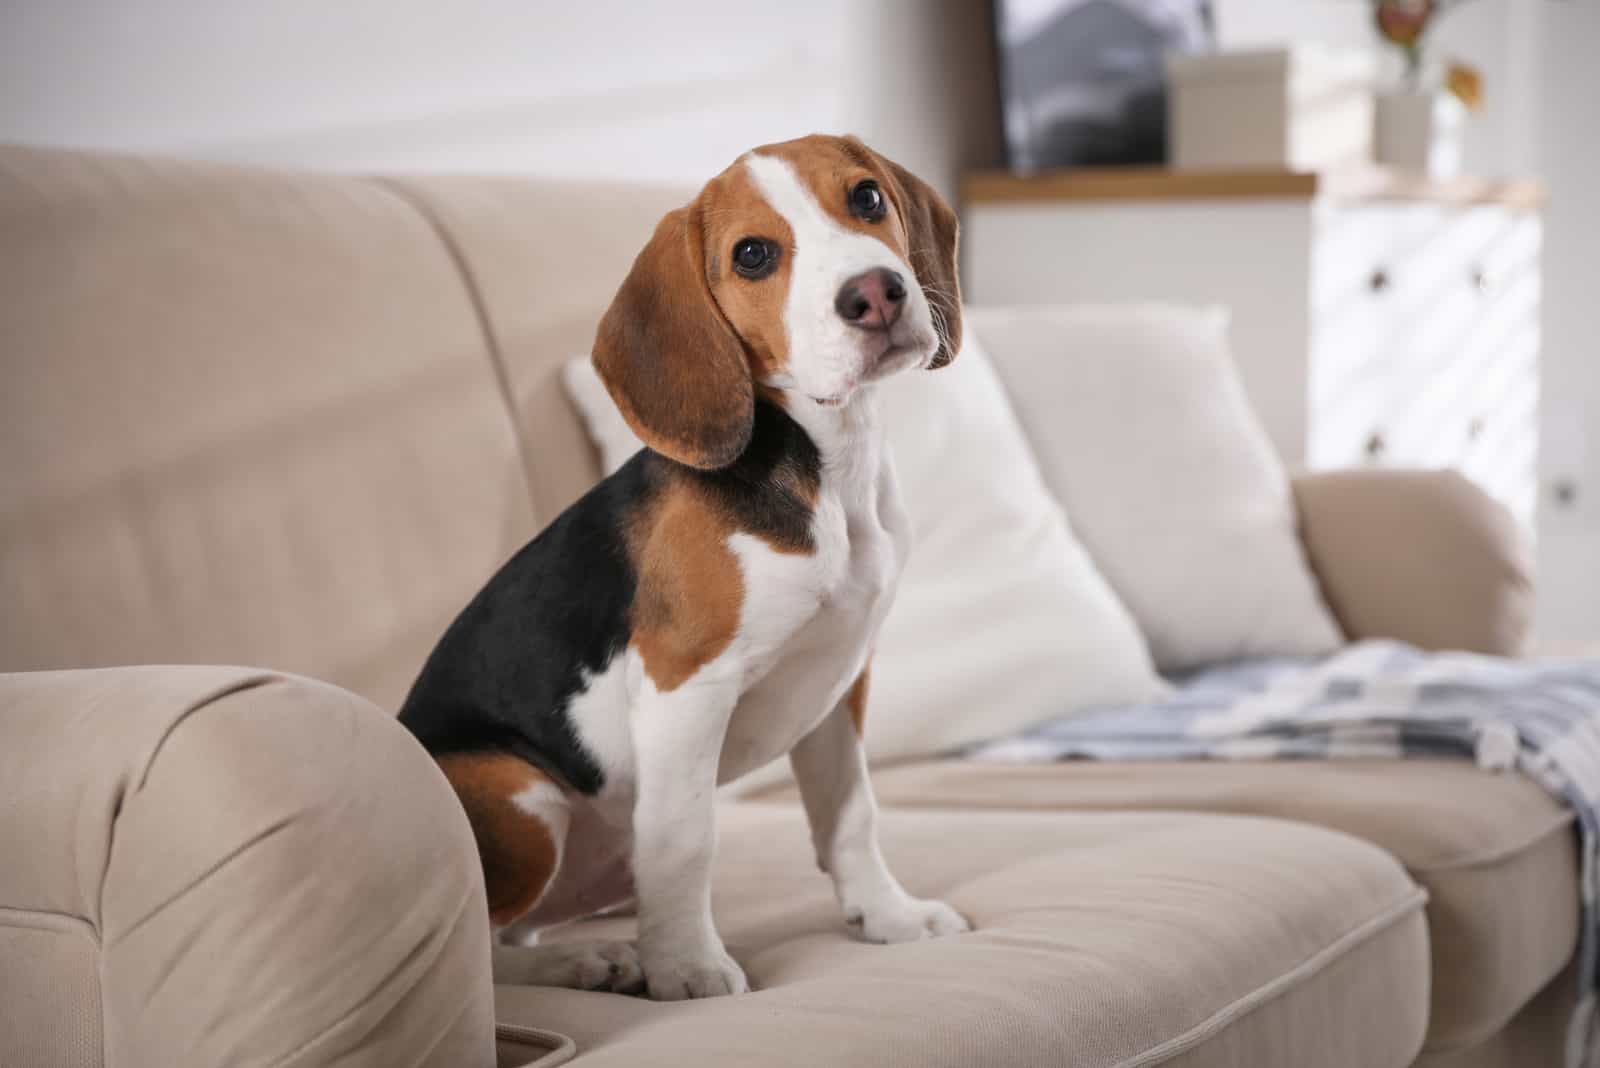 Cute Beagle puppy on sofa indoors